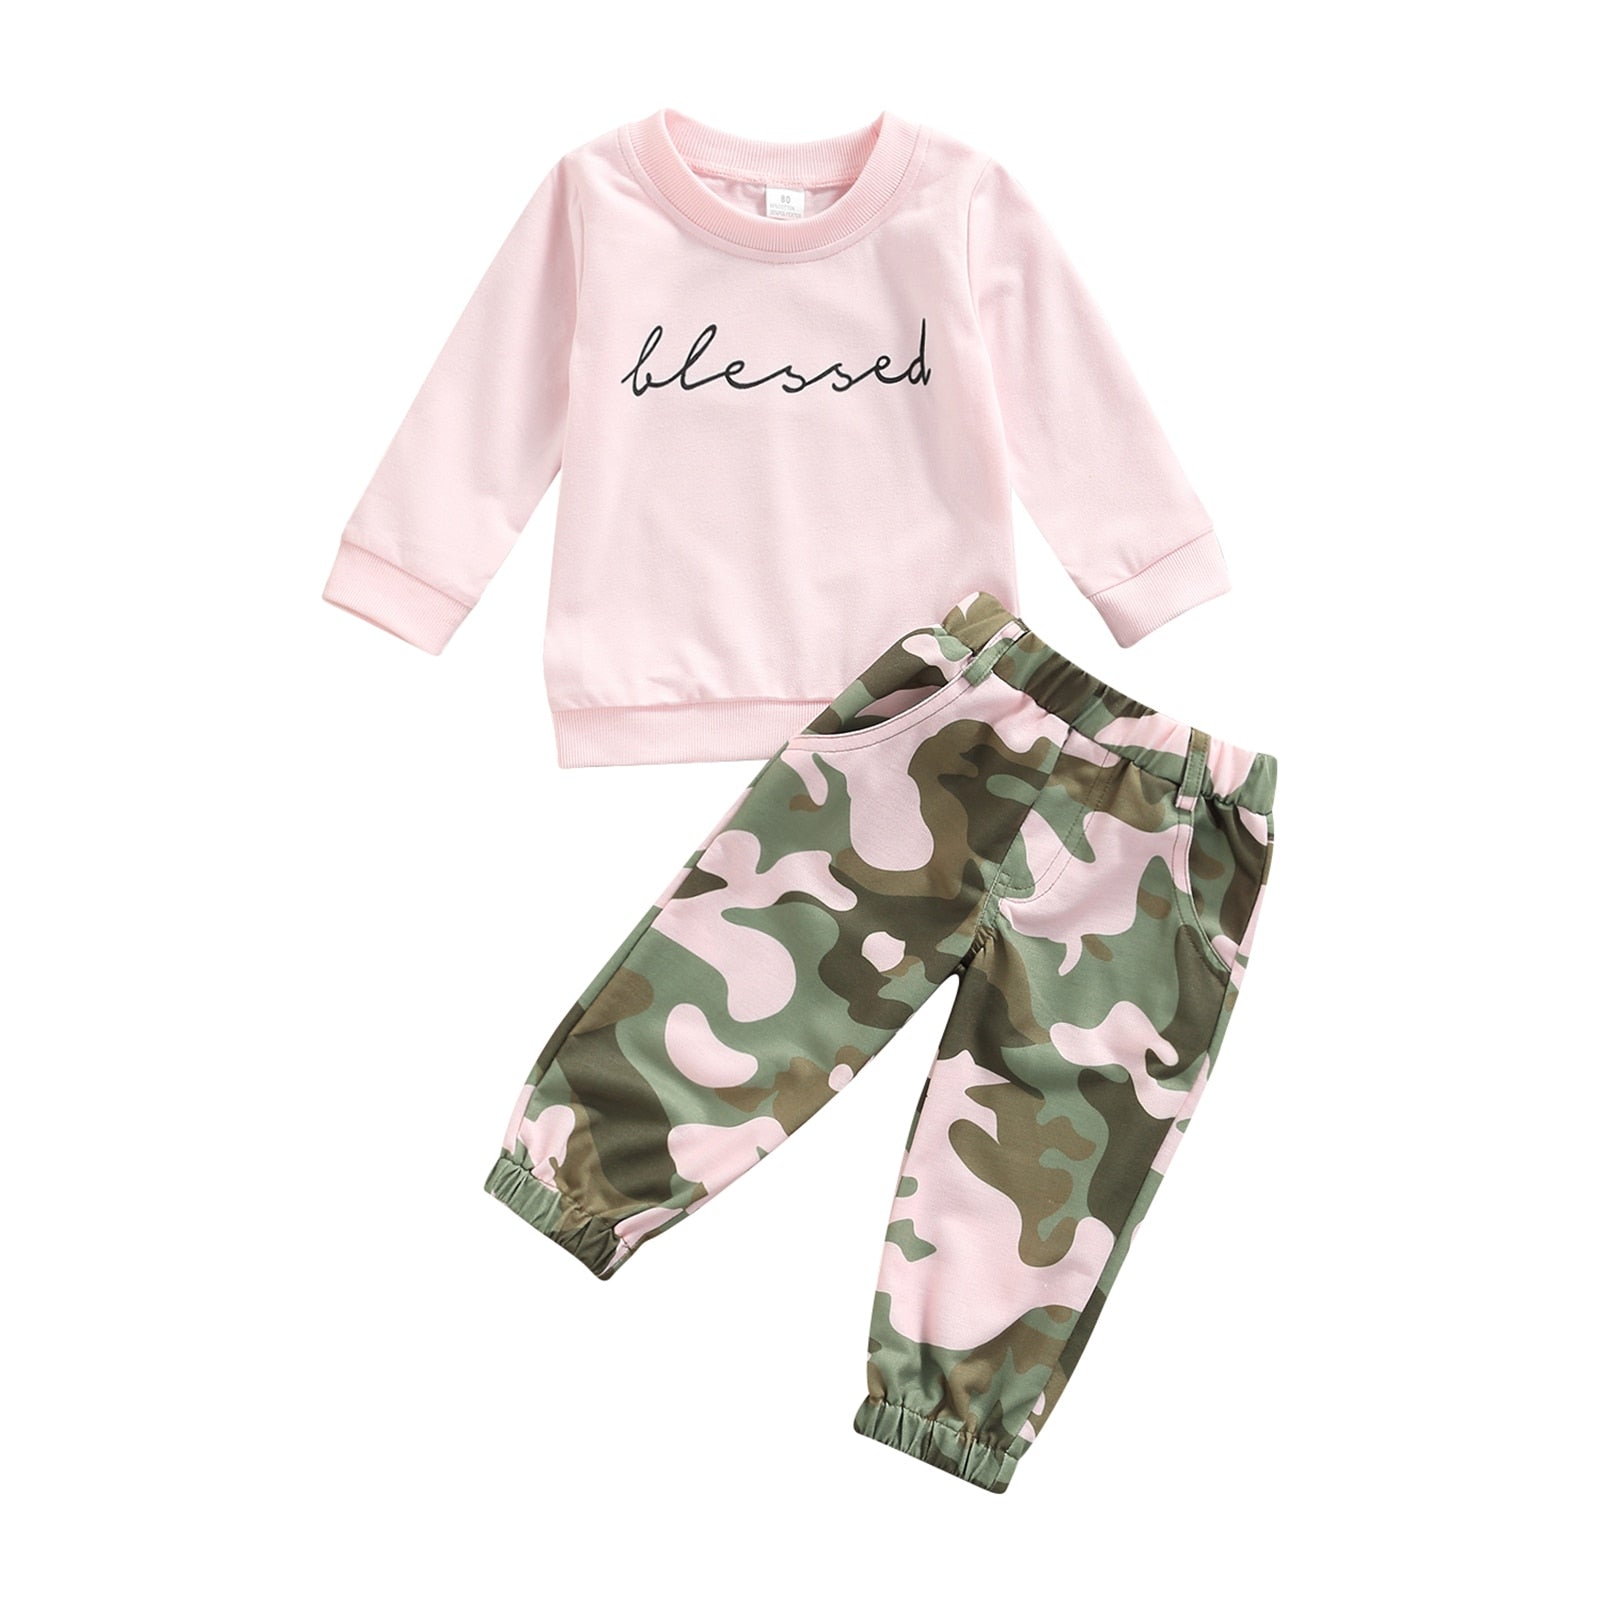 Toddler Girls Letter Print Long Sleeve Top/Camouflage Pants Set